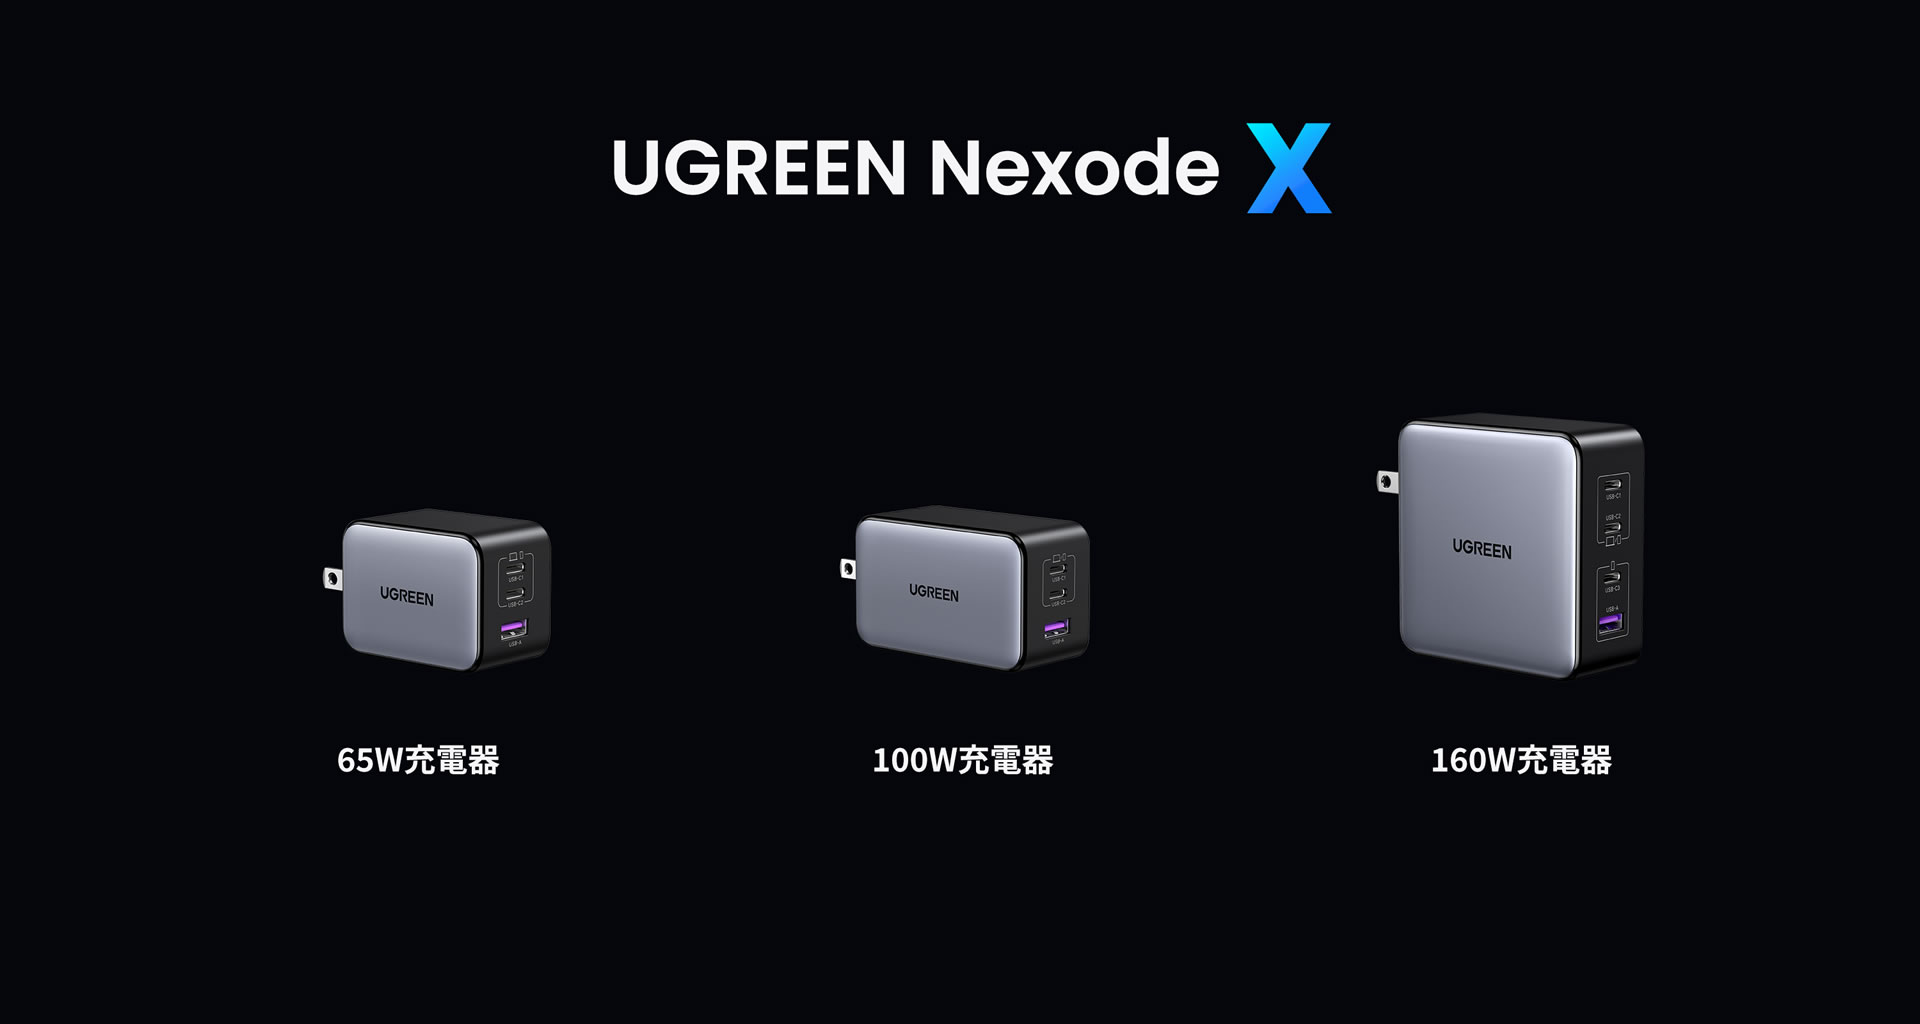 UGREEN、同社史上最小サイズの急速充電器『Nexode X』シリーズを発売。65W、100W、160Wの3種類